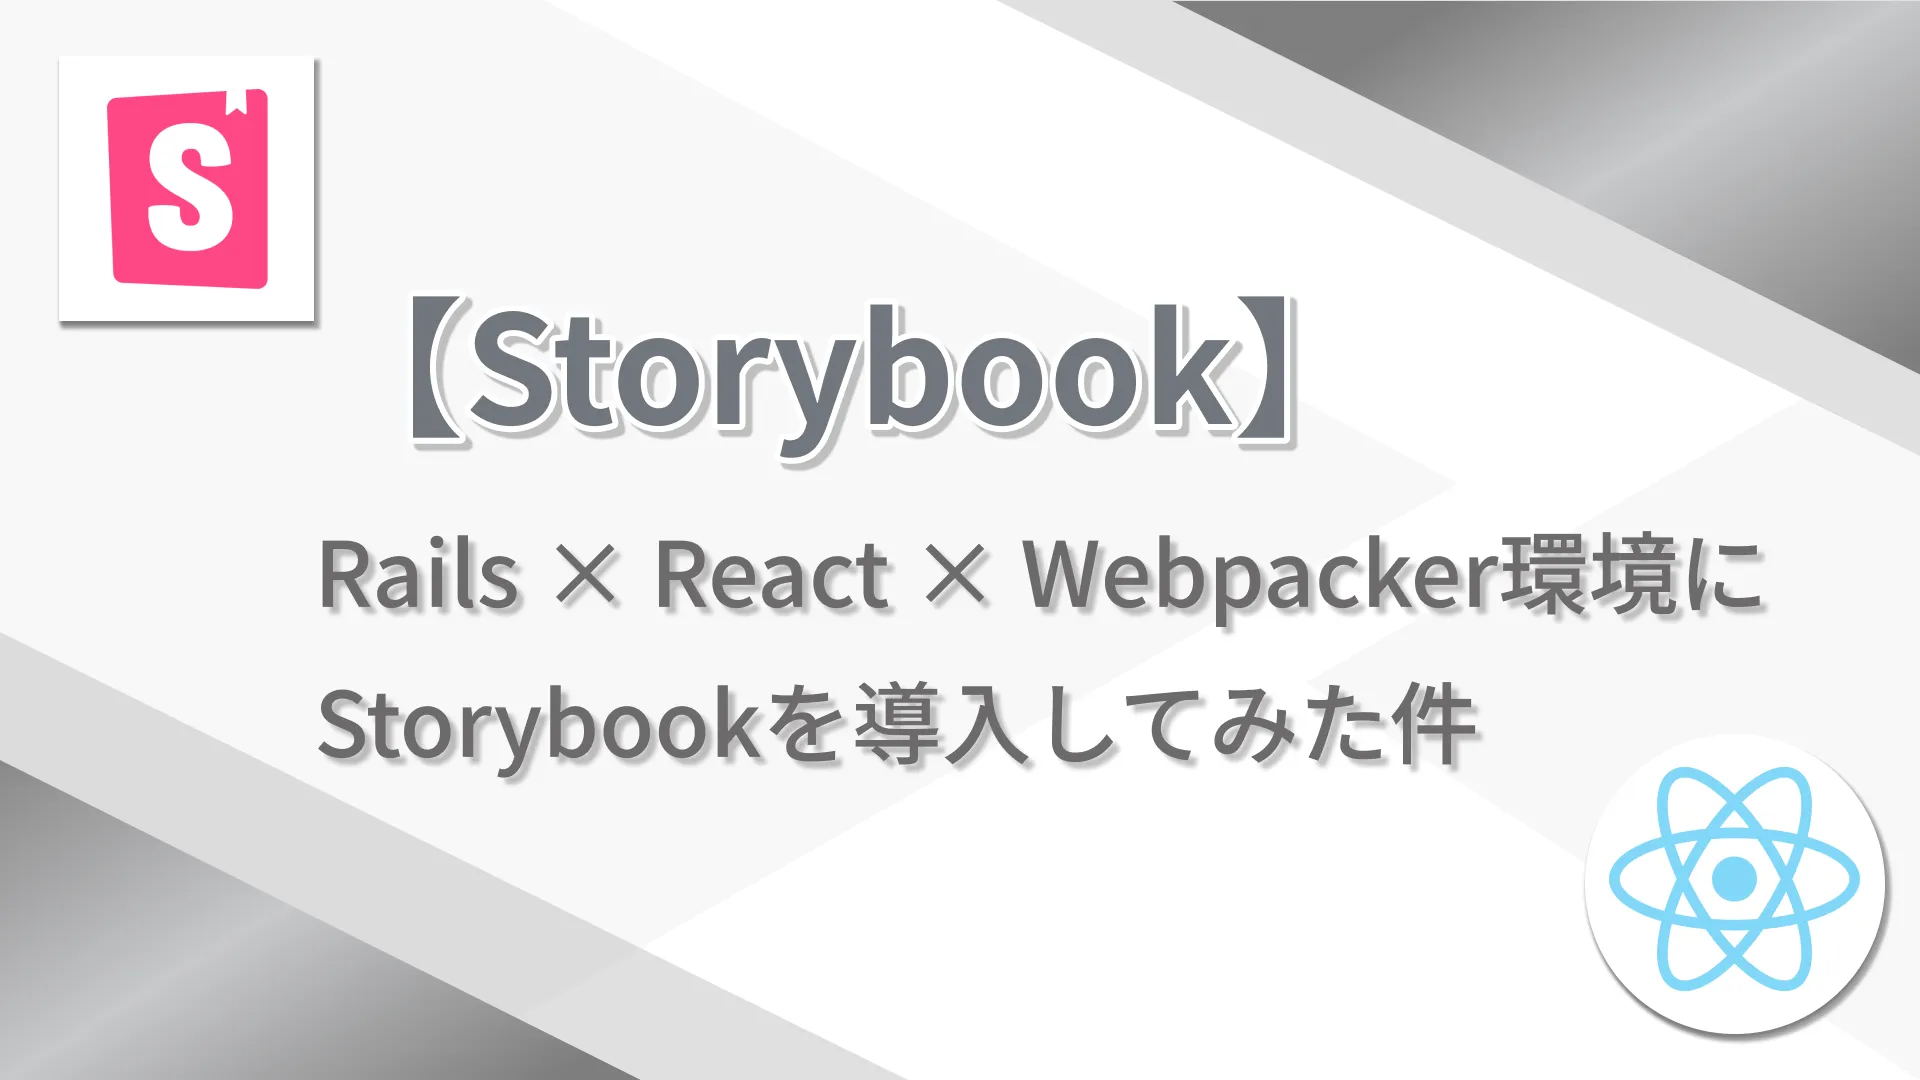 【Storybook】Rails × React × Webpacker環境にStorybookを導入してみた件